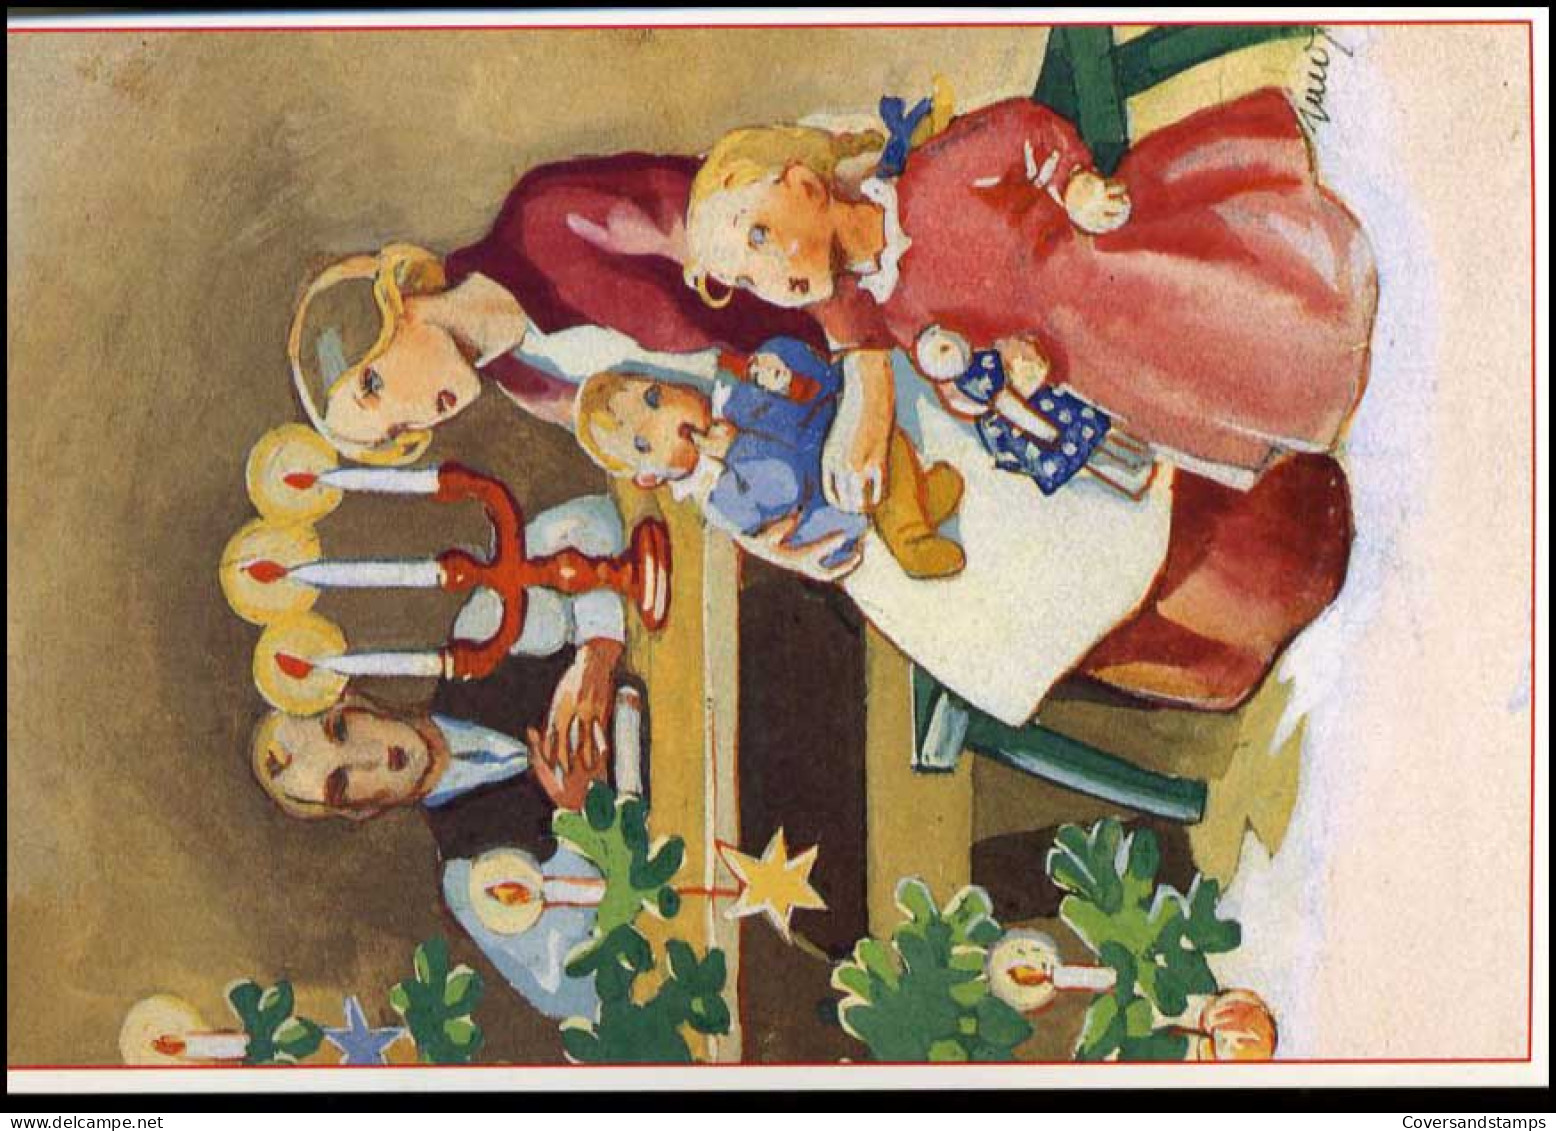  Finland - Kerstmis / Christmas - Postal Stationery